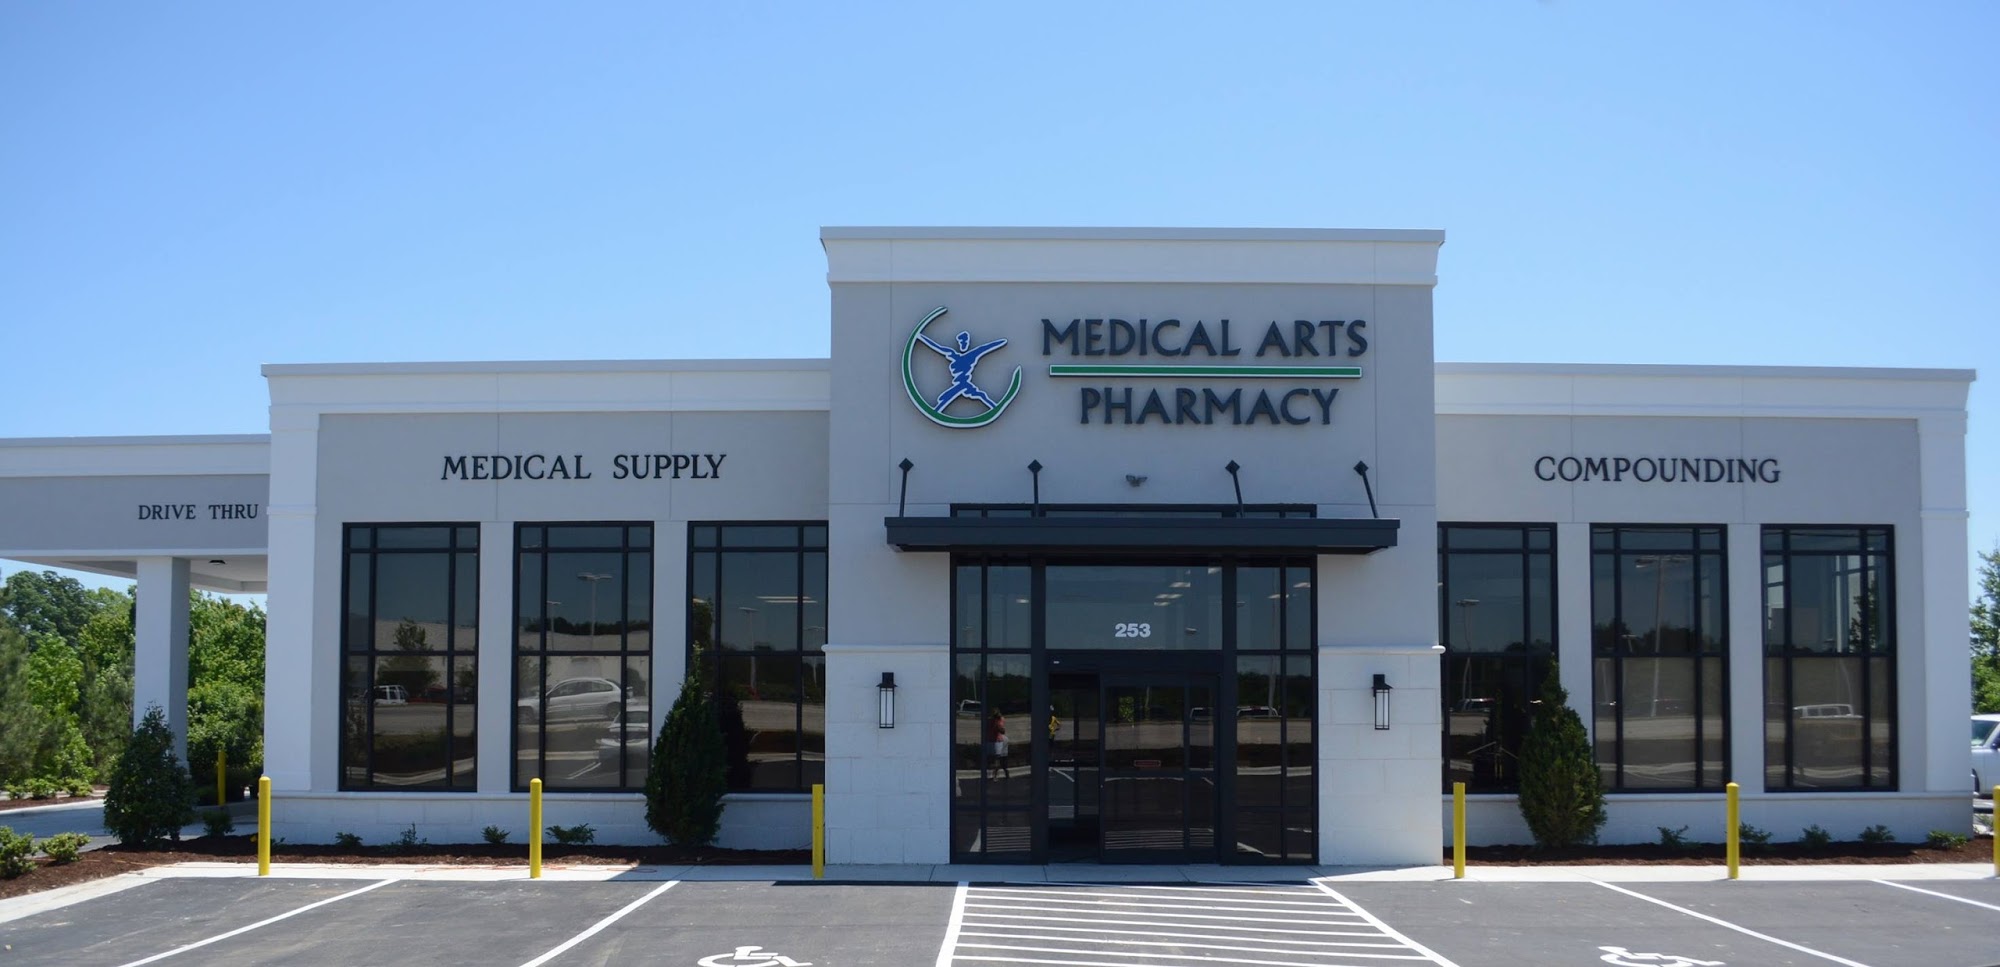 Medical Arts Pharmacy And Medical Supplies